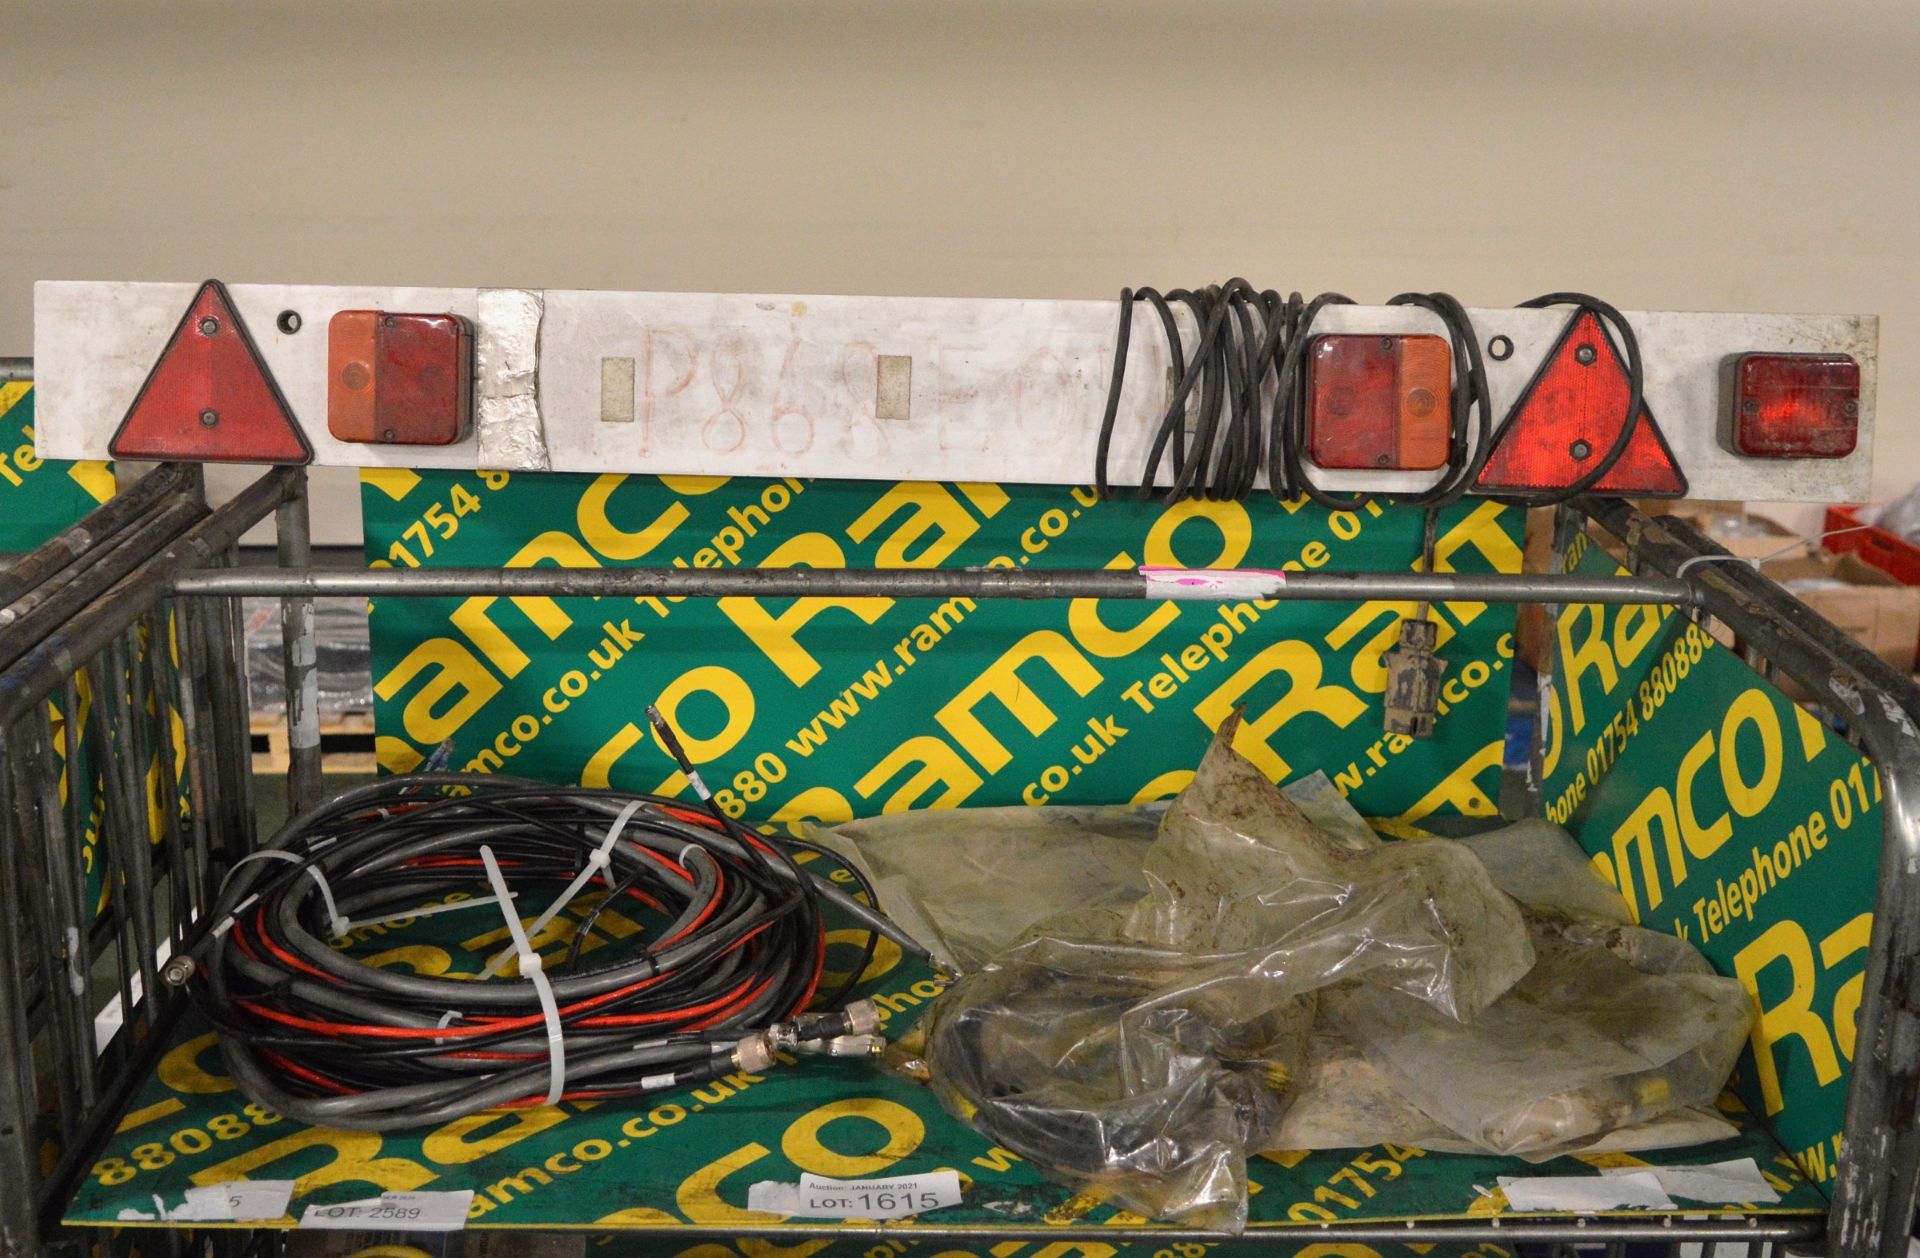 Trailer Light Board & Radiac Meter Cables